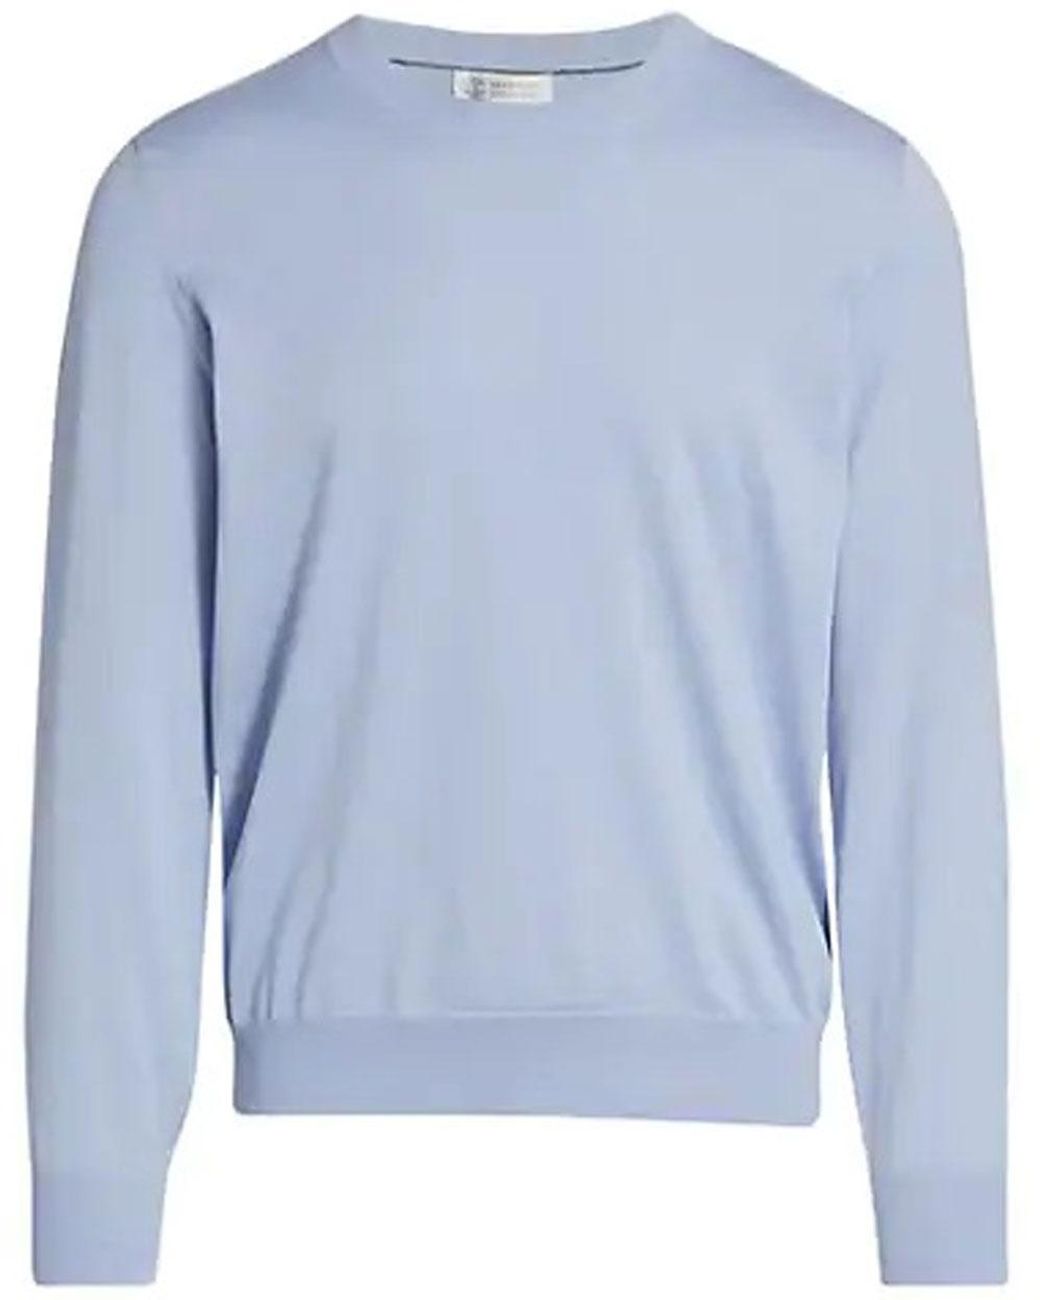 Brunello Cucinelli Cotton Light Blue Knit Sweater 56 Itl for Men - Lyst